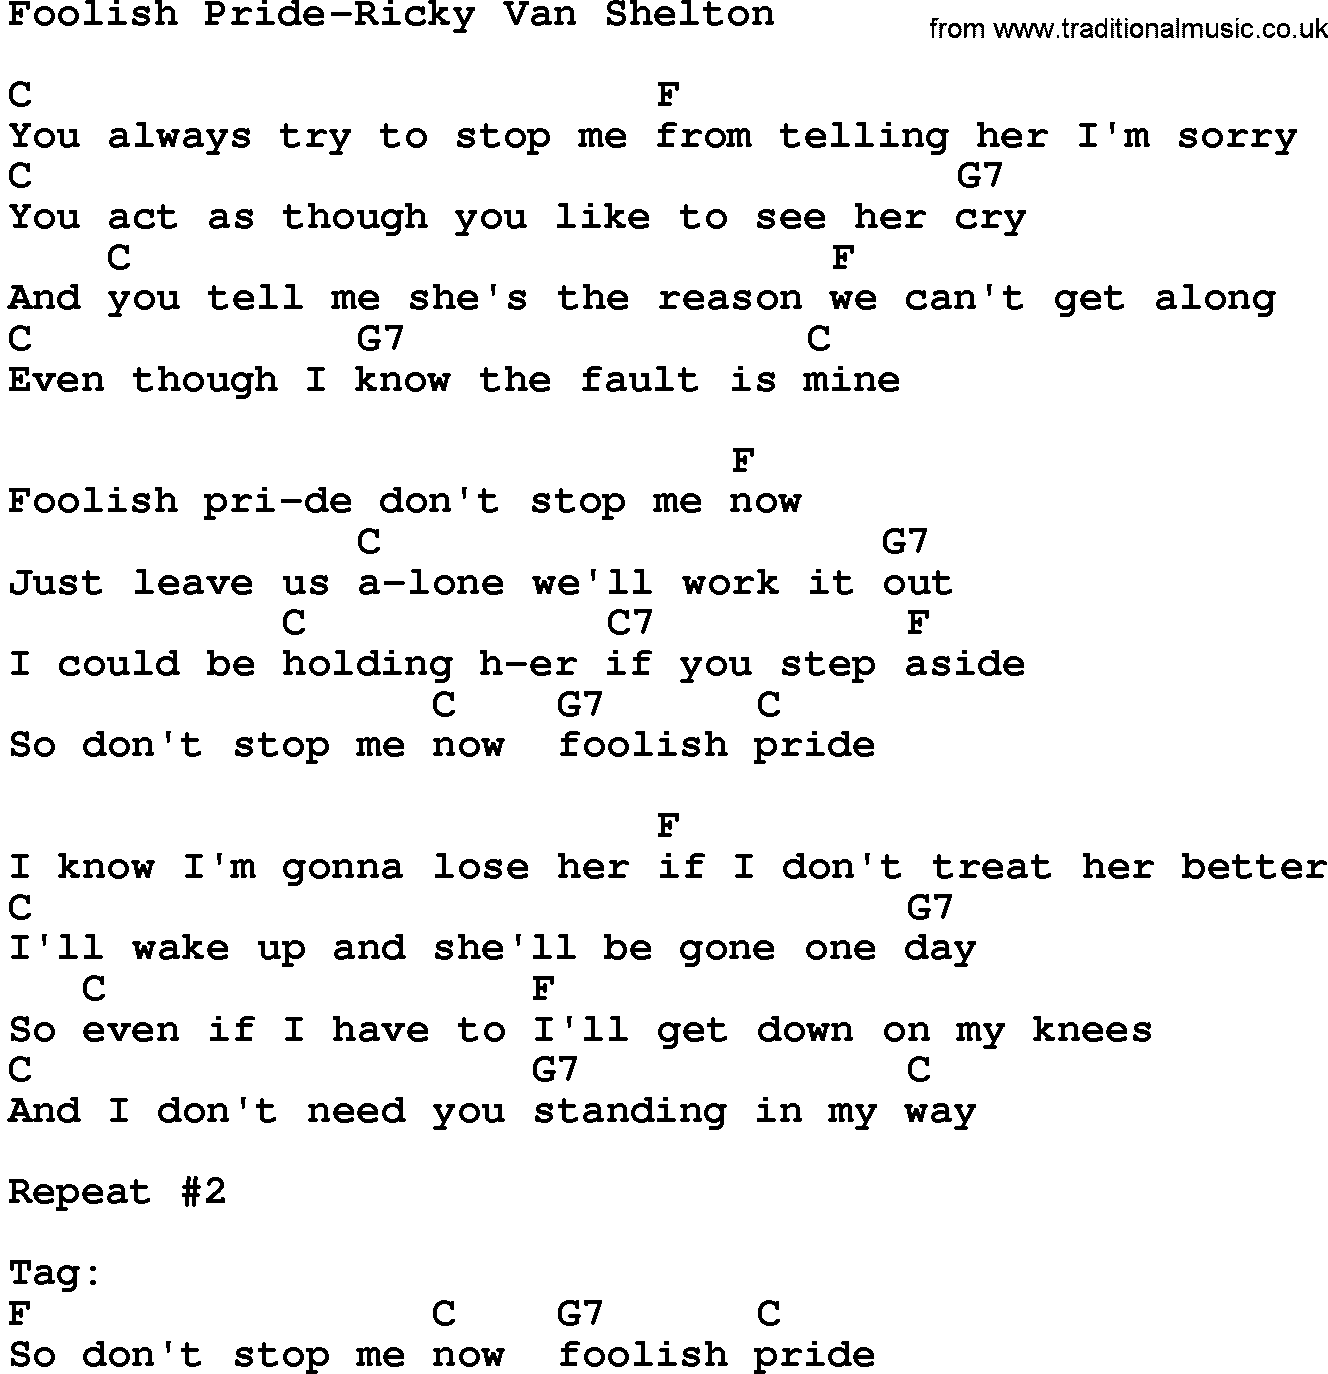 Country music song: Foolish Pride-Ricky Van Shelton lyrics and chords